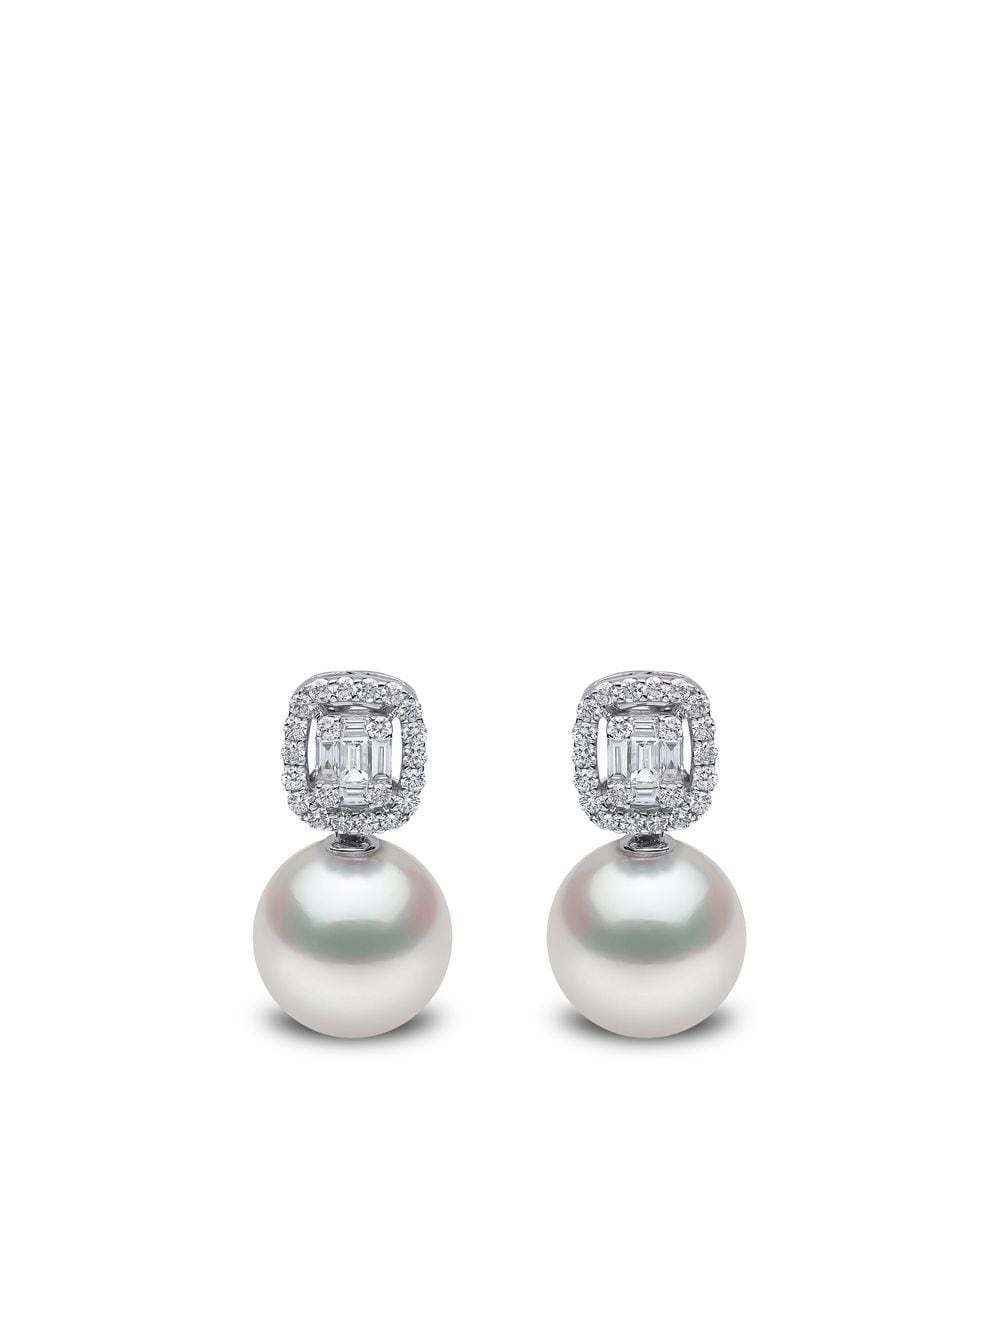 Yoko London 18kt white gold Starlight south sea pearl and diamond earrings - Silver von Yoko London